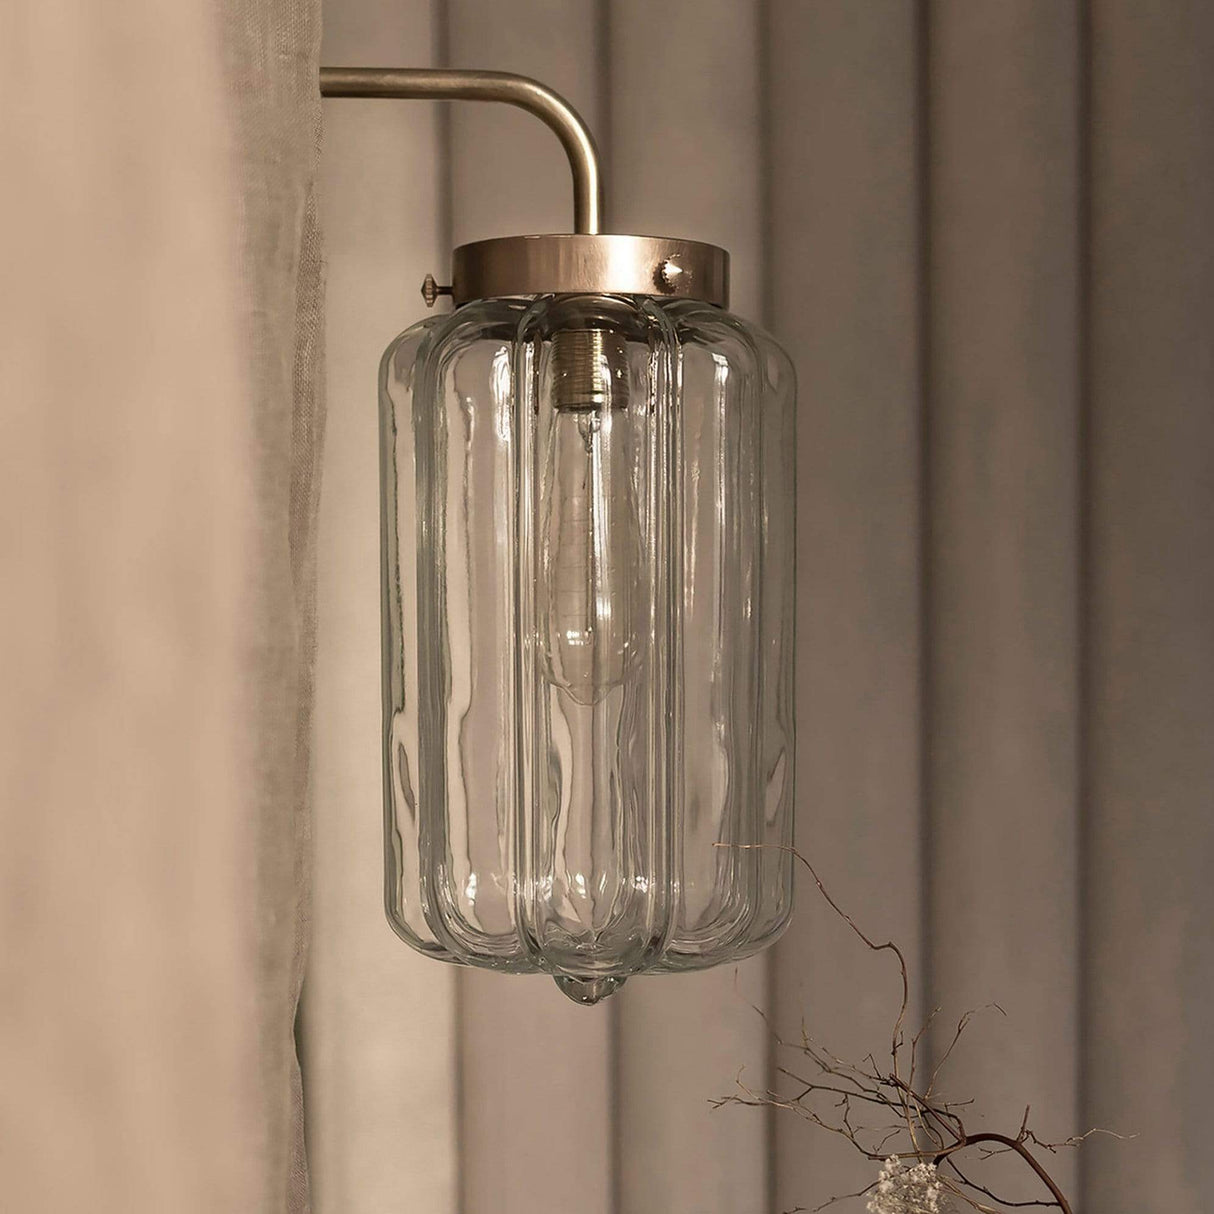 BoBo Intriguing Objects Glass Wall Lamp Clear Deco Lighting bobo-BI042-53-2